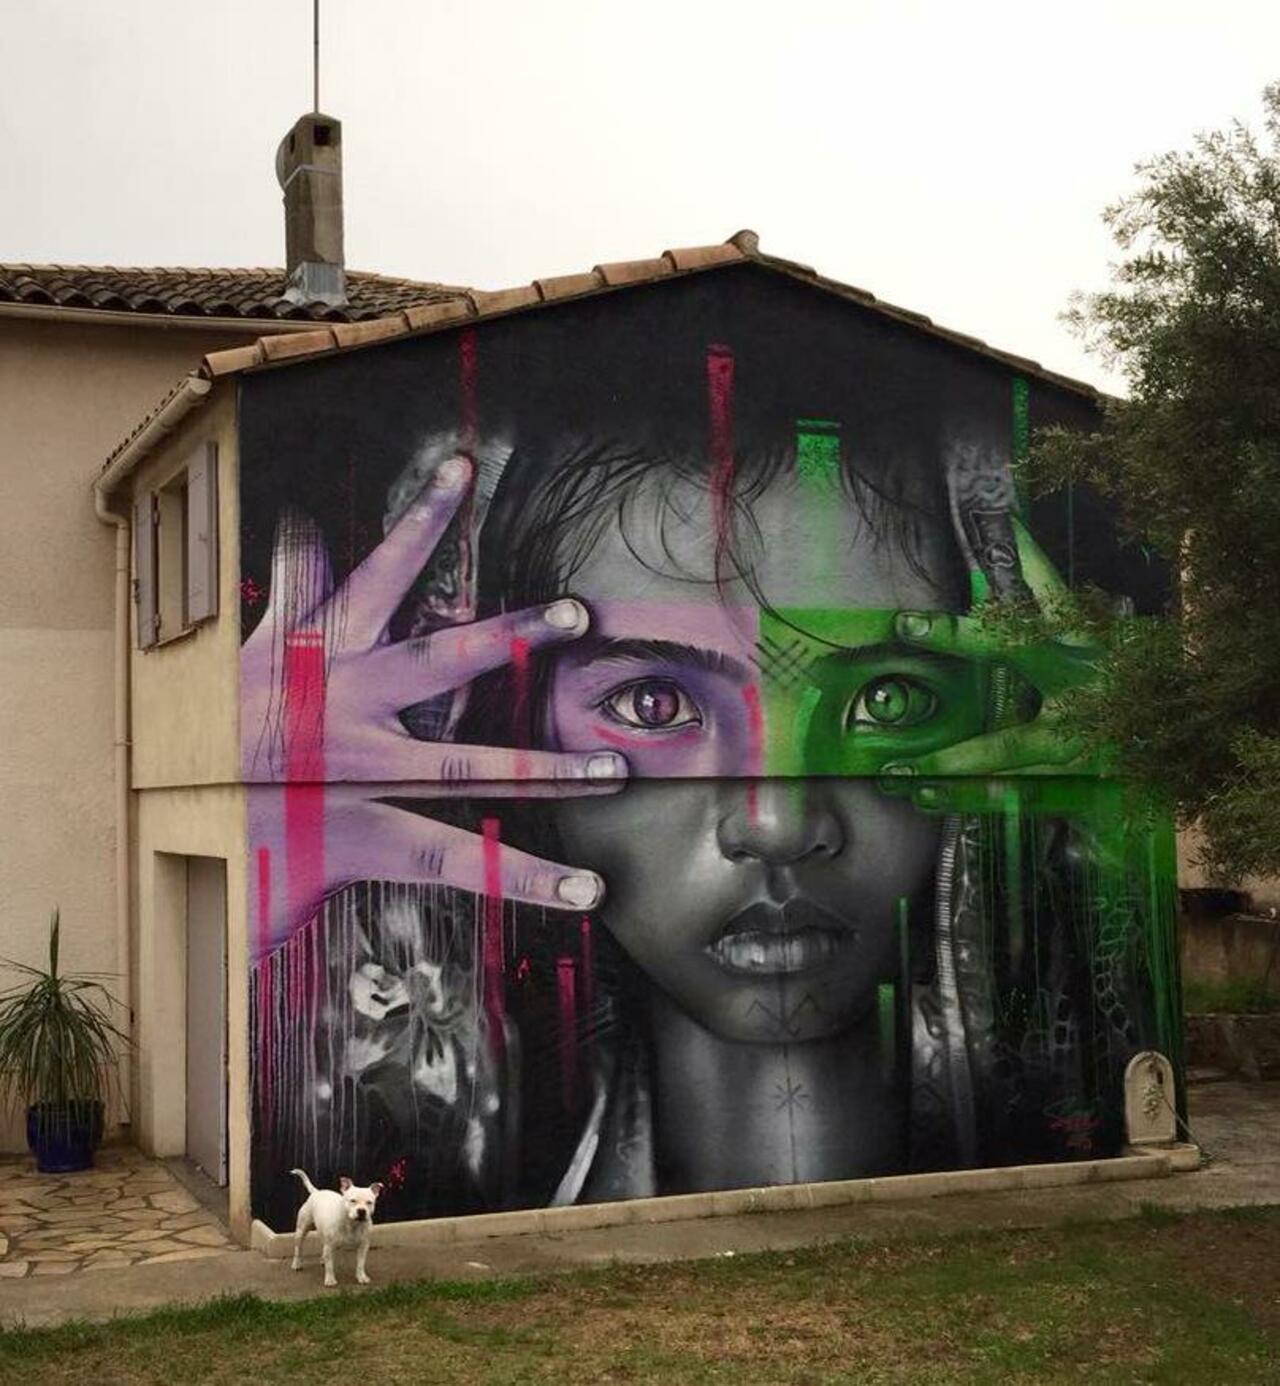 'Open your mind'
Street Art by Guillaume Dusotoit 

#art #arte #graffiti #streetart http://t.co/dVdt5asUUq